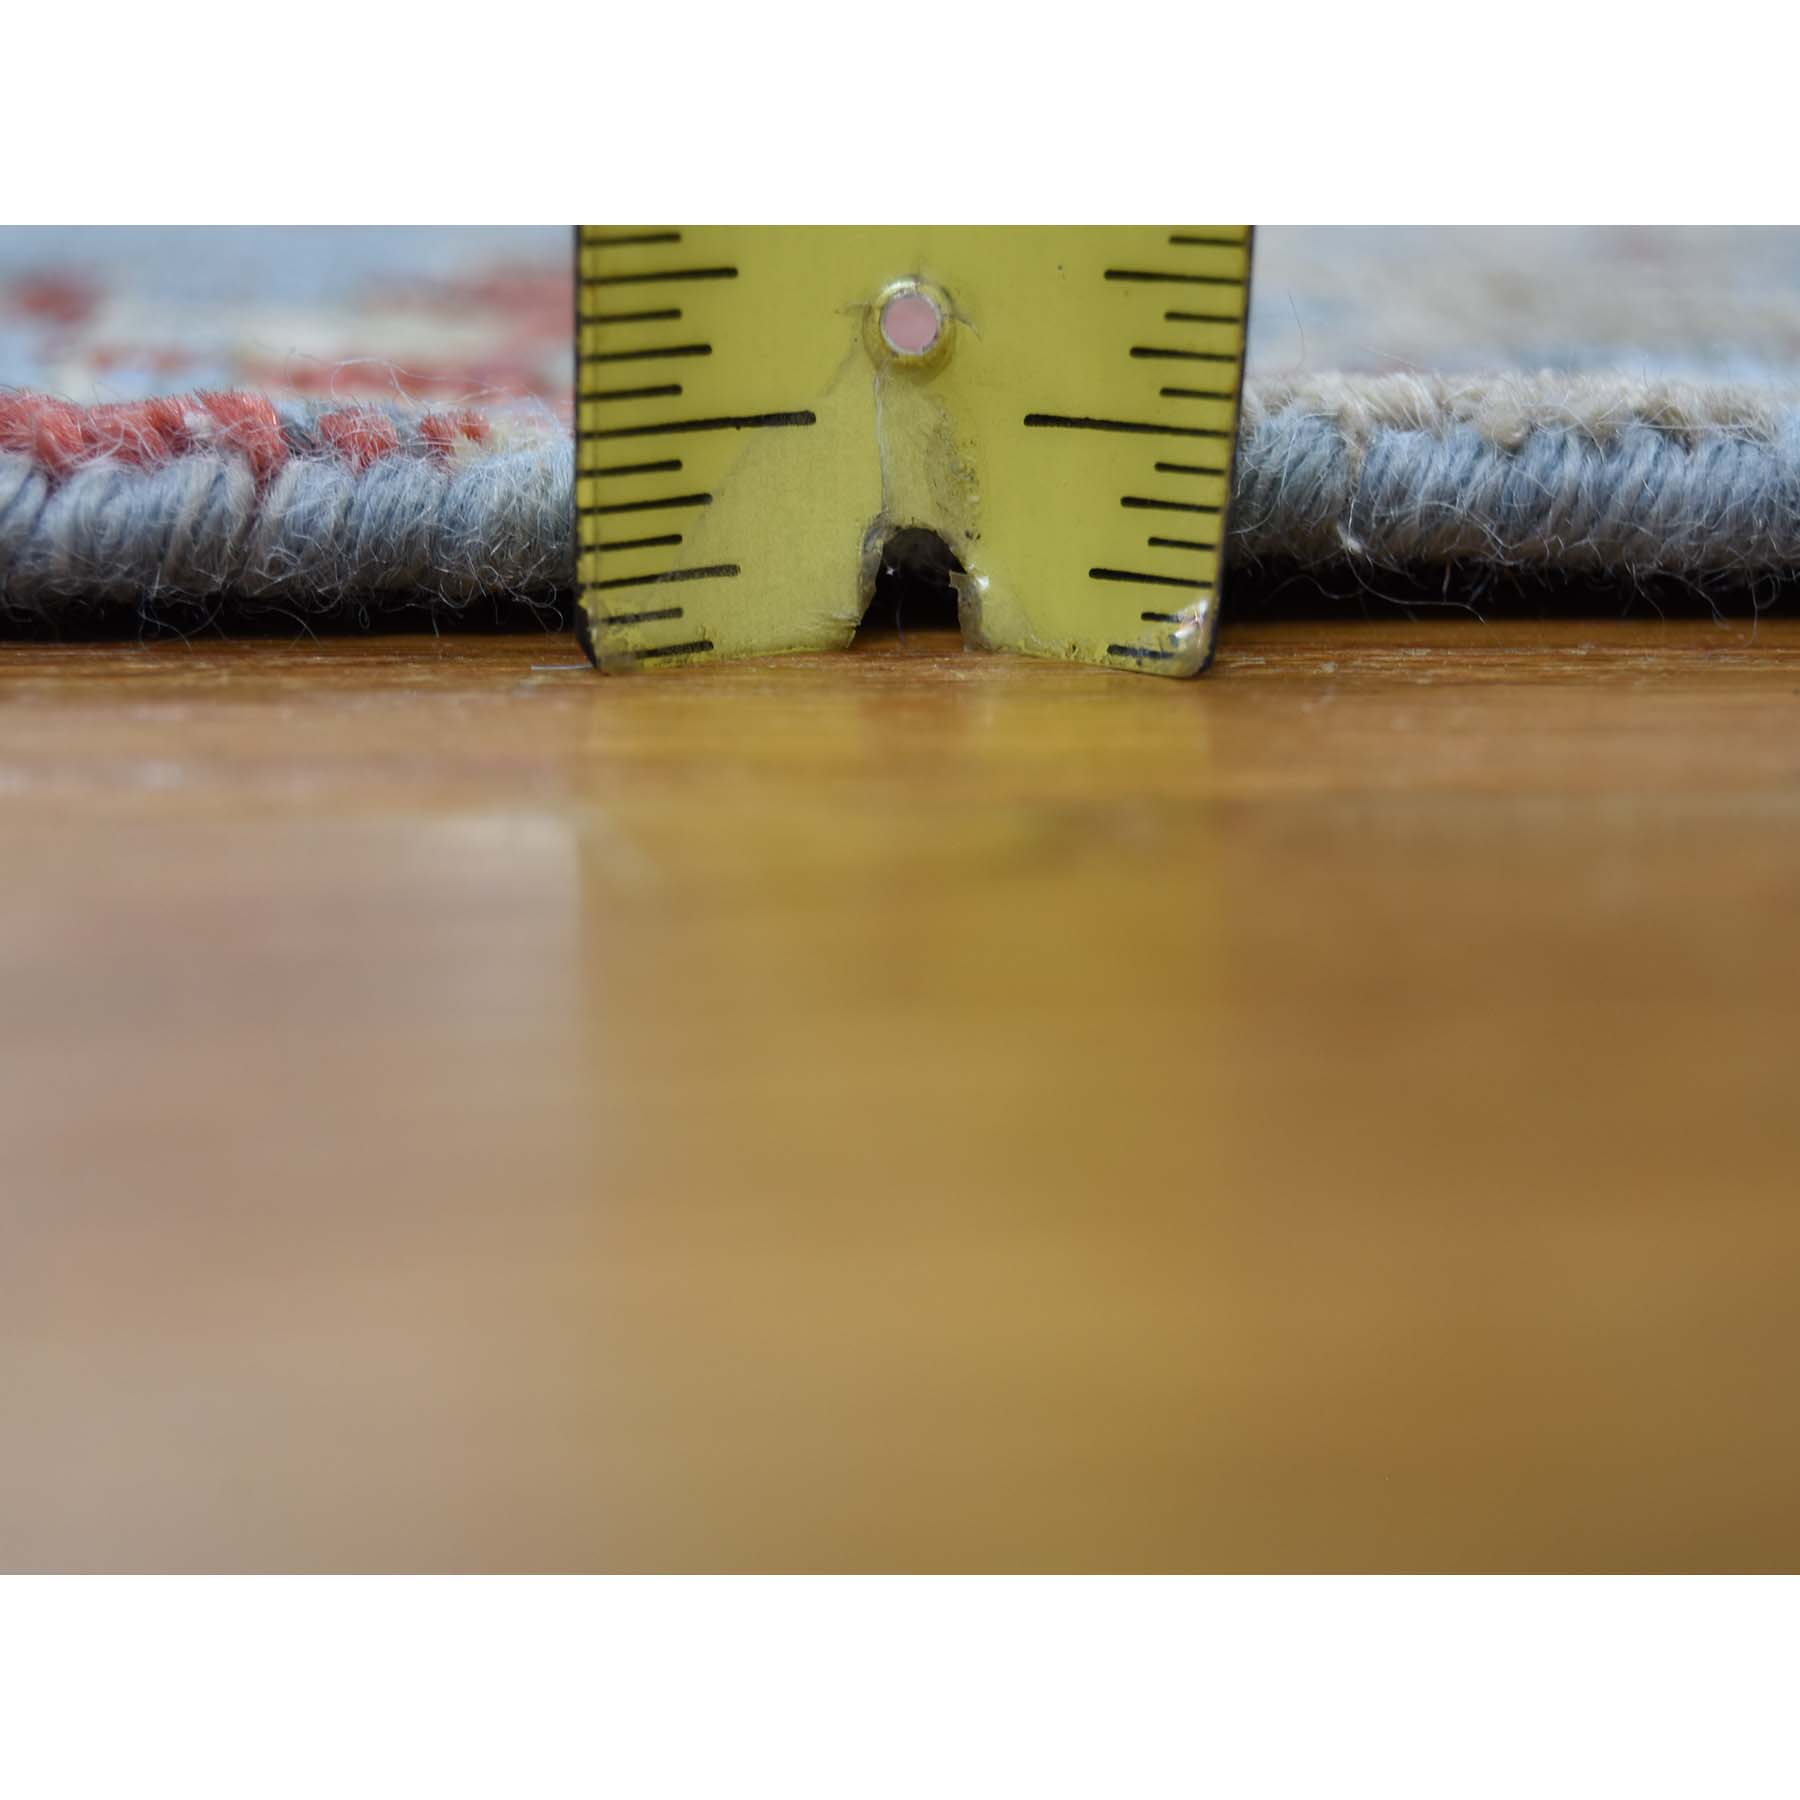 2'5"x6'1" Hand Woven Silk With Textured Wool Broken Design Runner Rug 